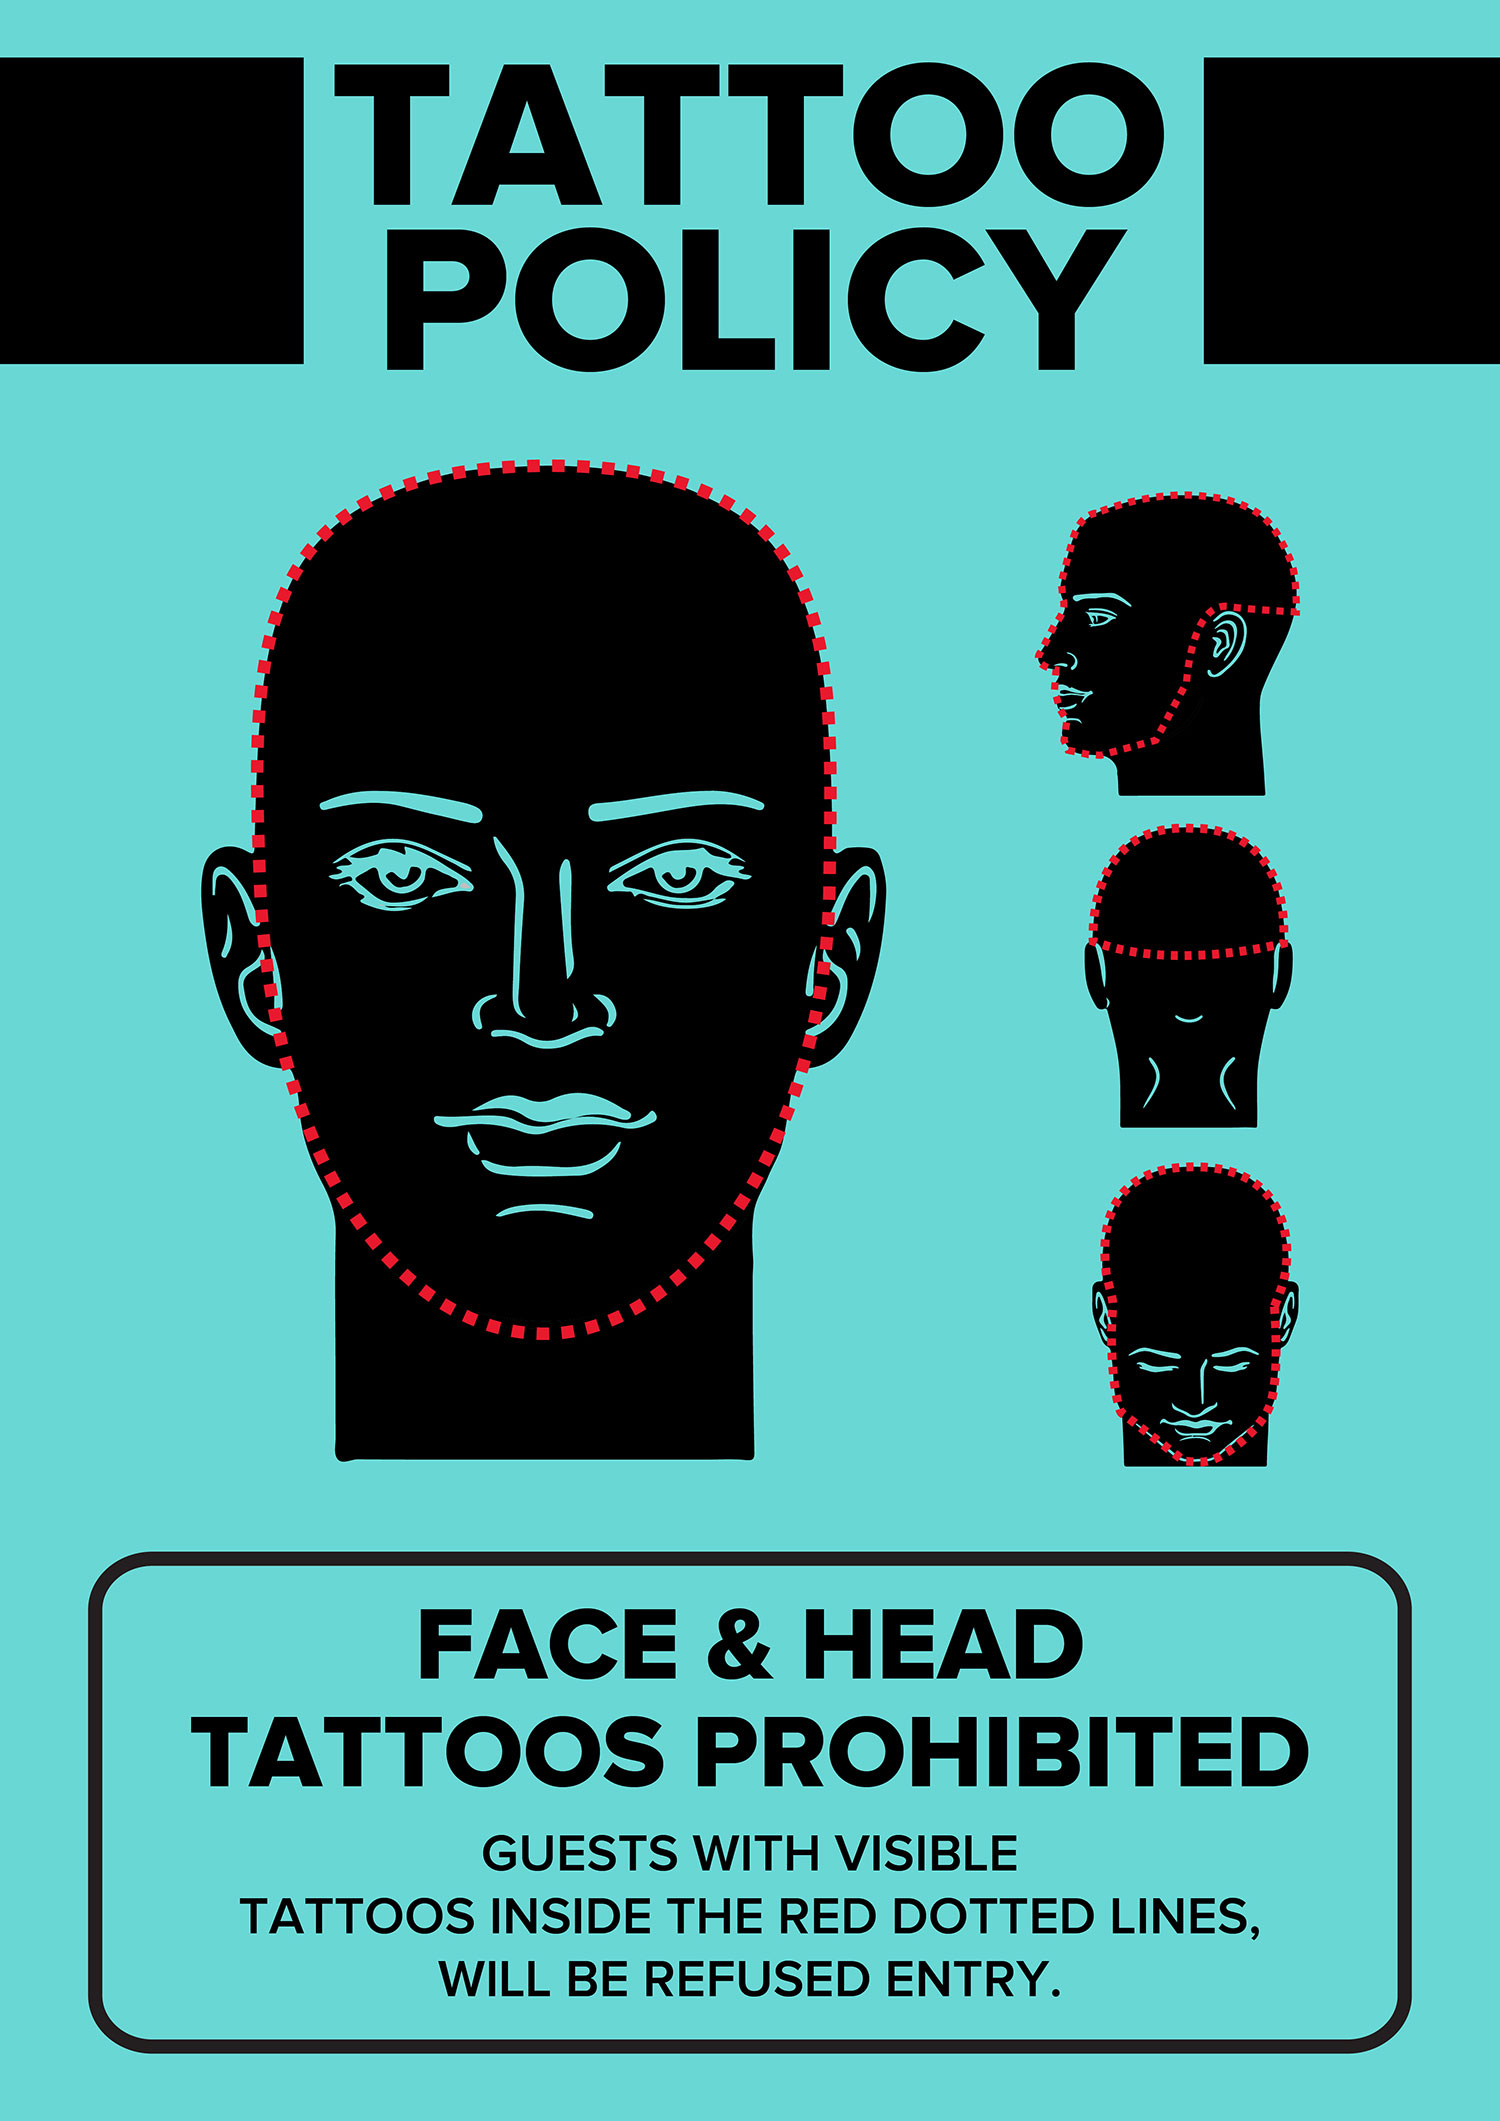 Philadelphia police drafting new tattoo policy - 6abc Philadelphia